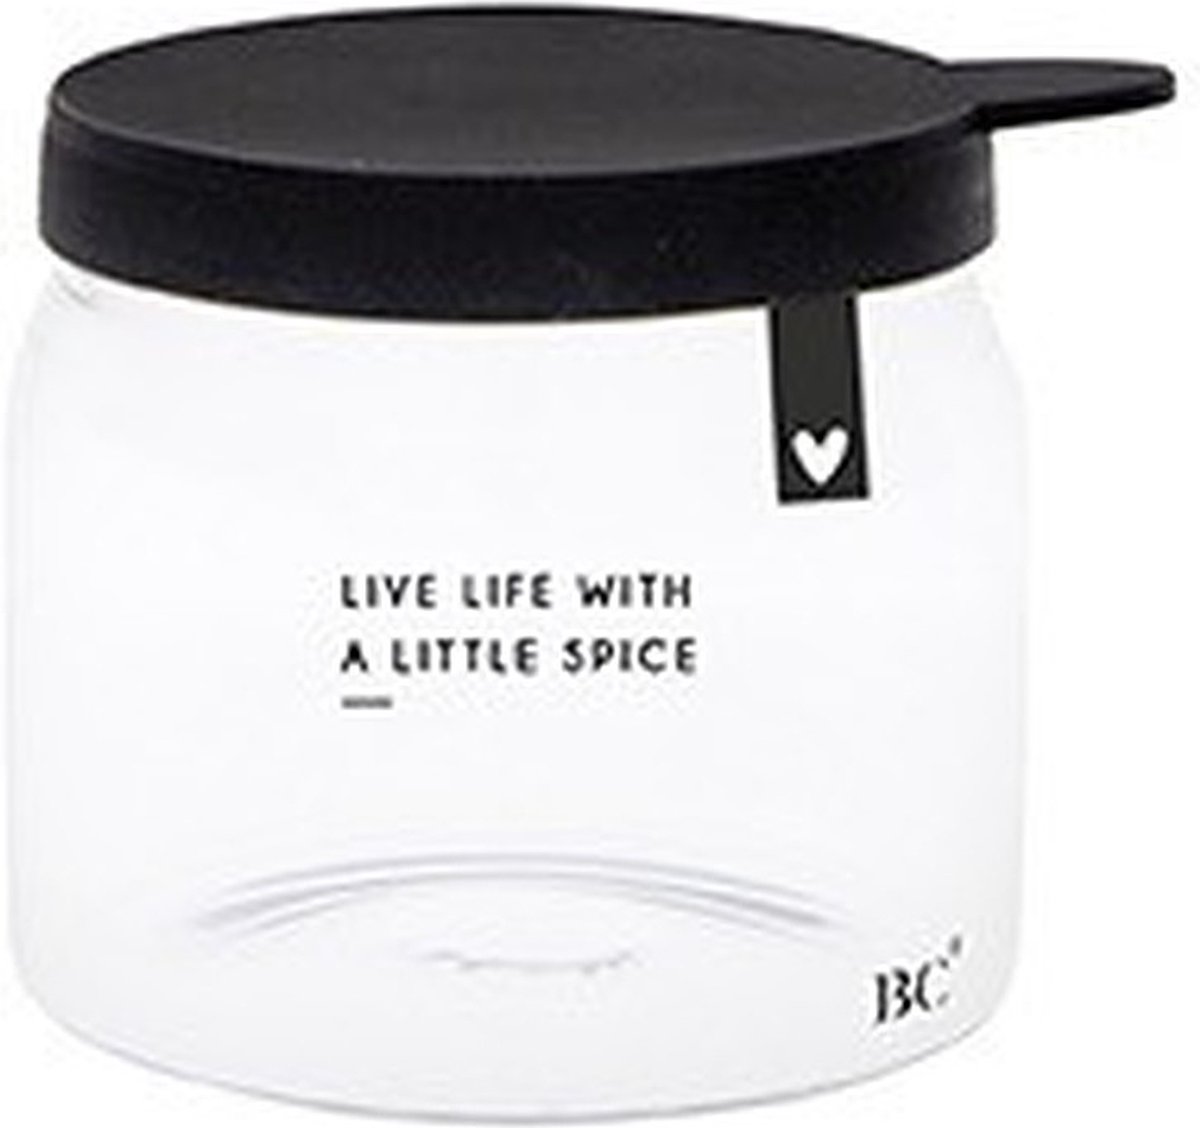 Glazen voorraadpot XXS - Live life with a little spice